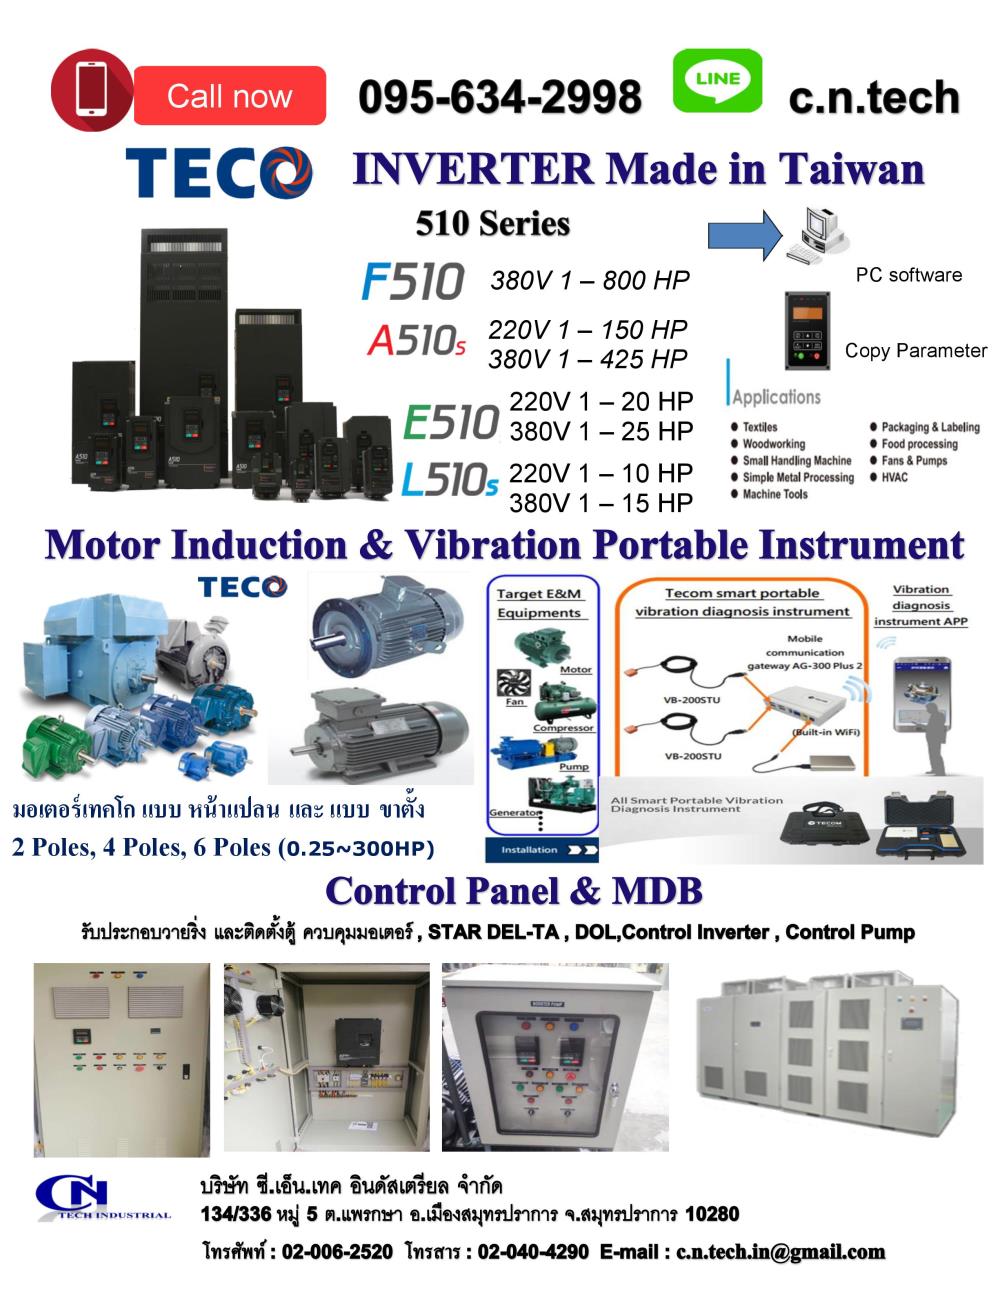 TECO INVERTER,TECO INVERTER,TECO,Energy and Environment/Power Supplies/Inverters & Converters